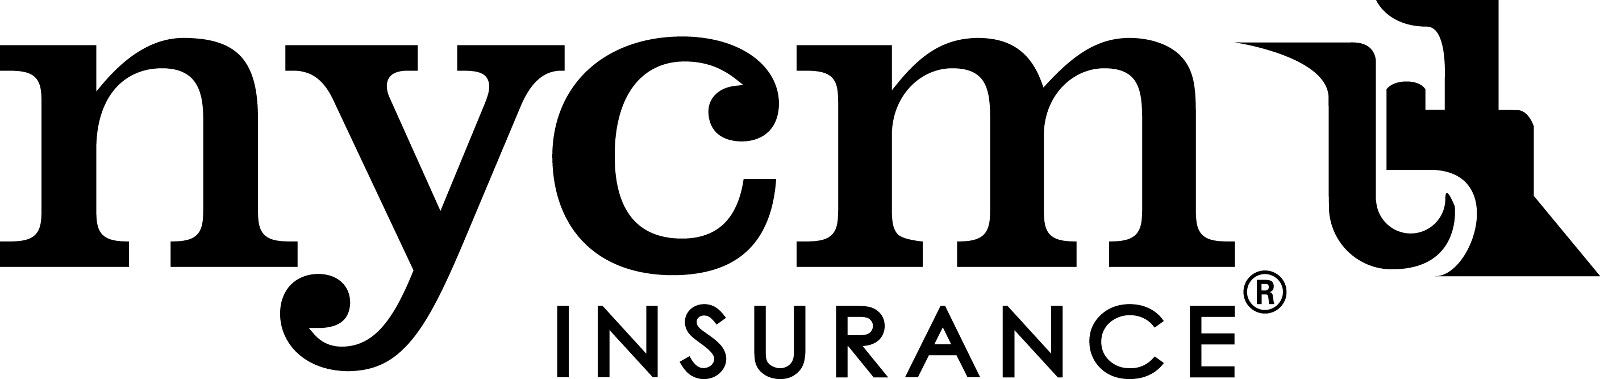 NYCM Insurance logo